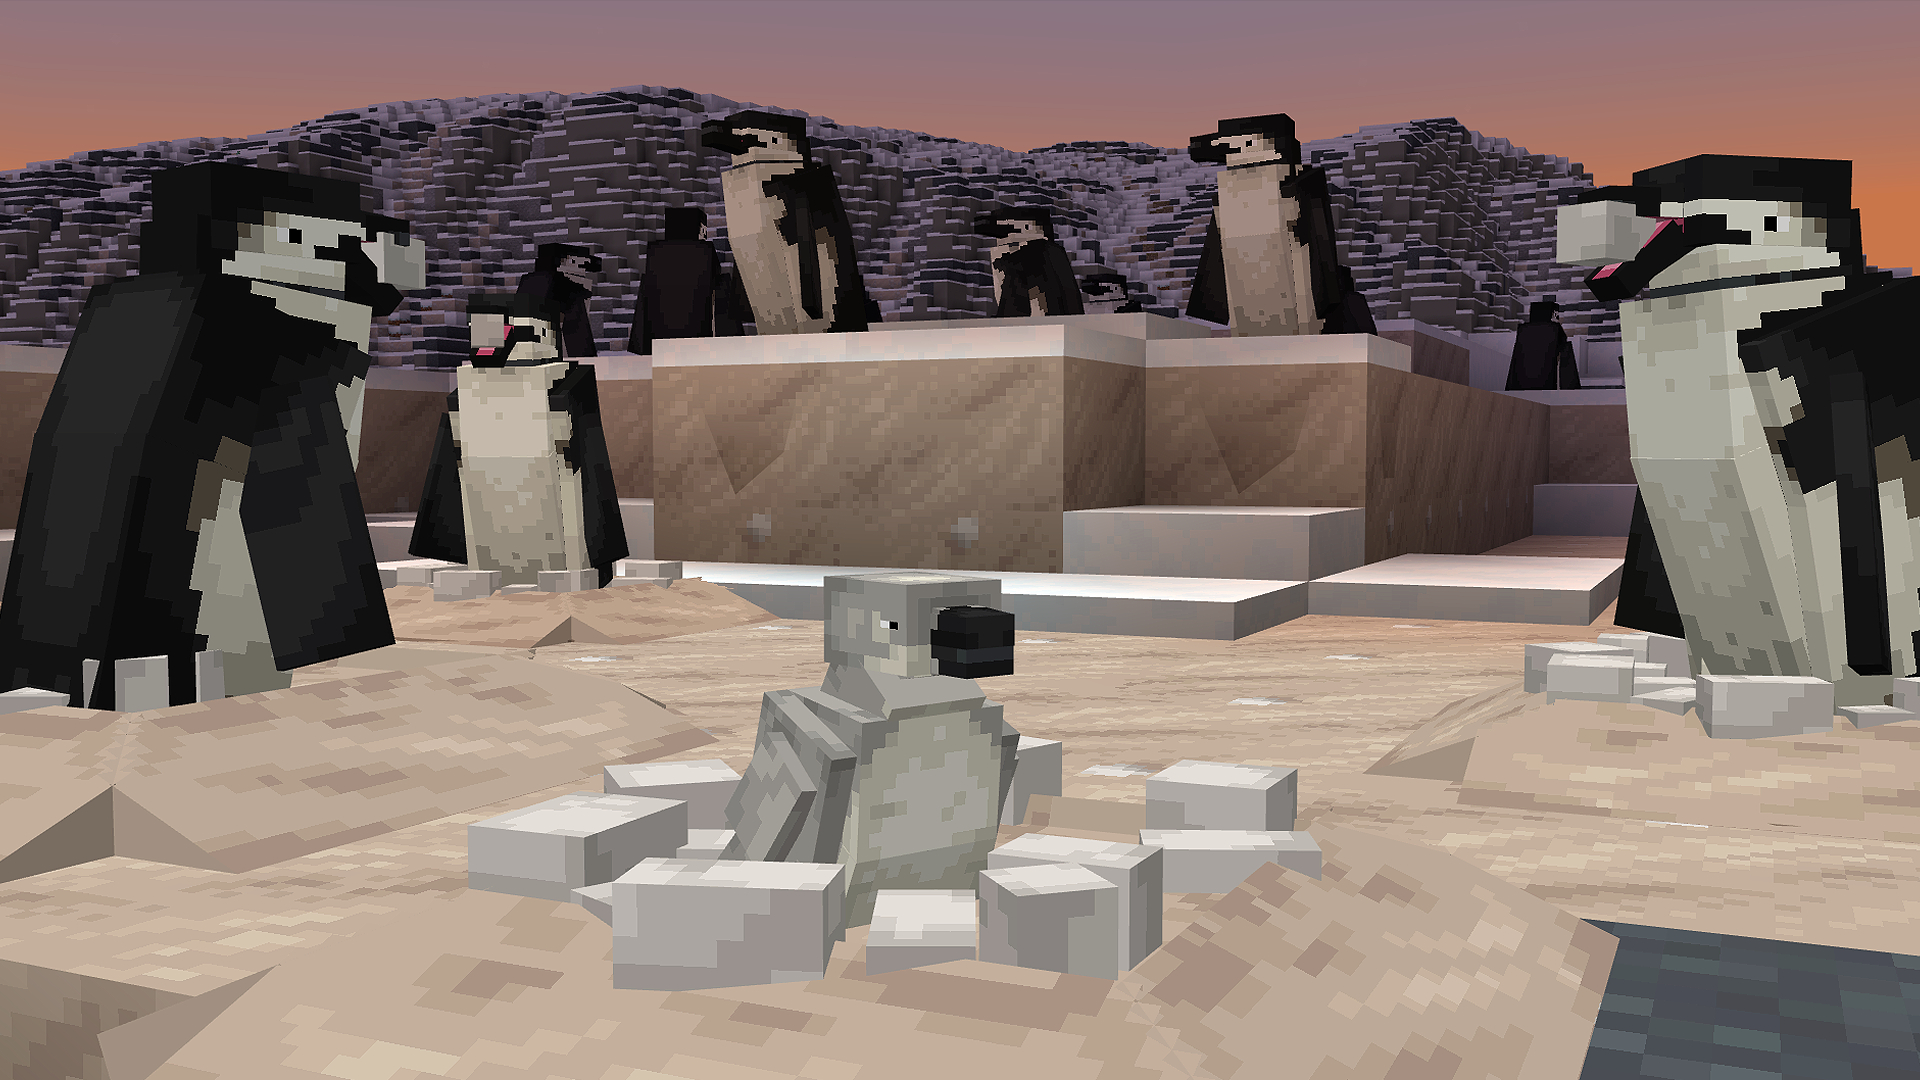 Minecraft penguins